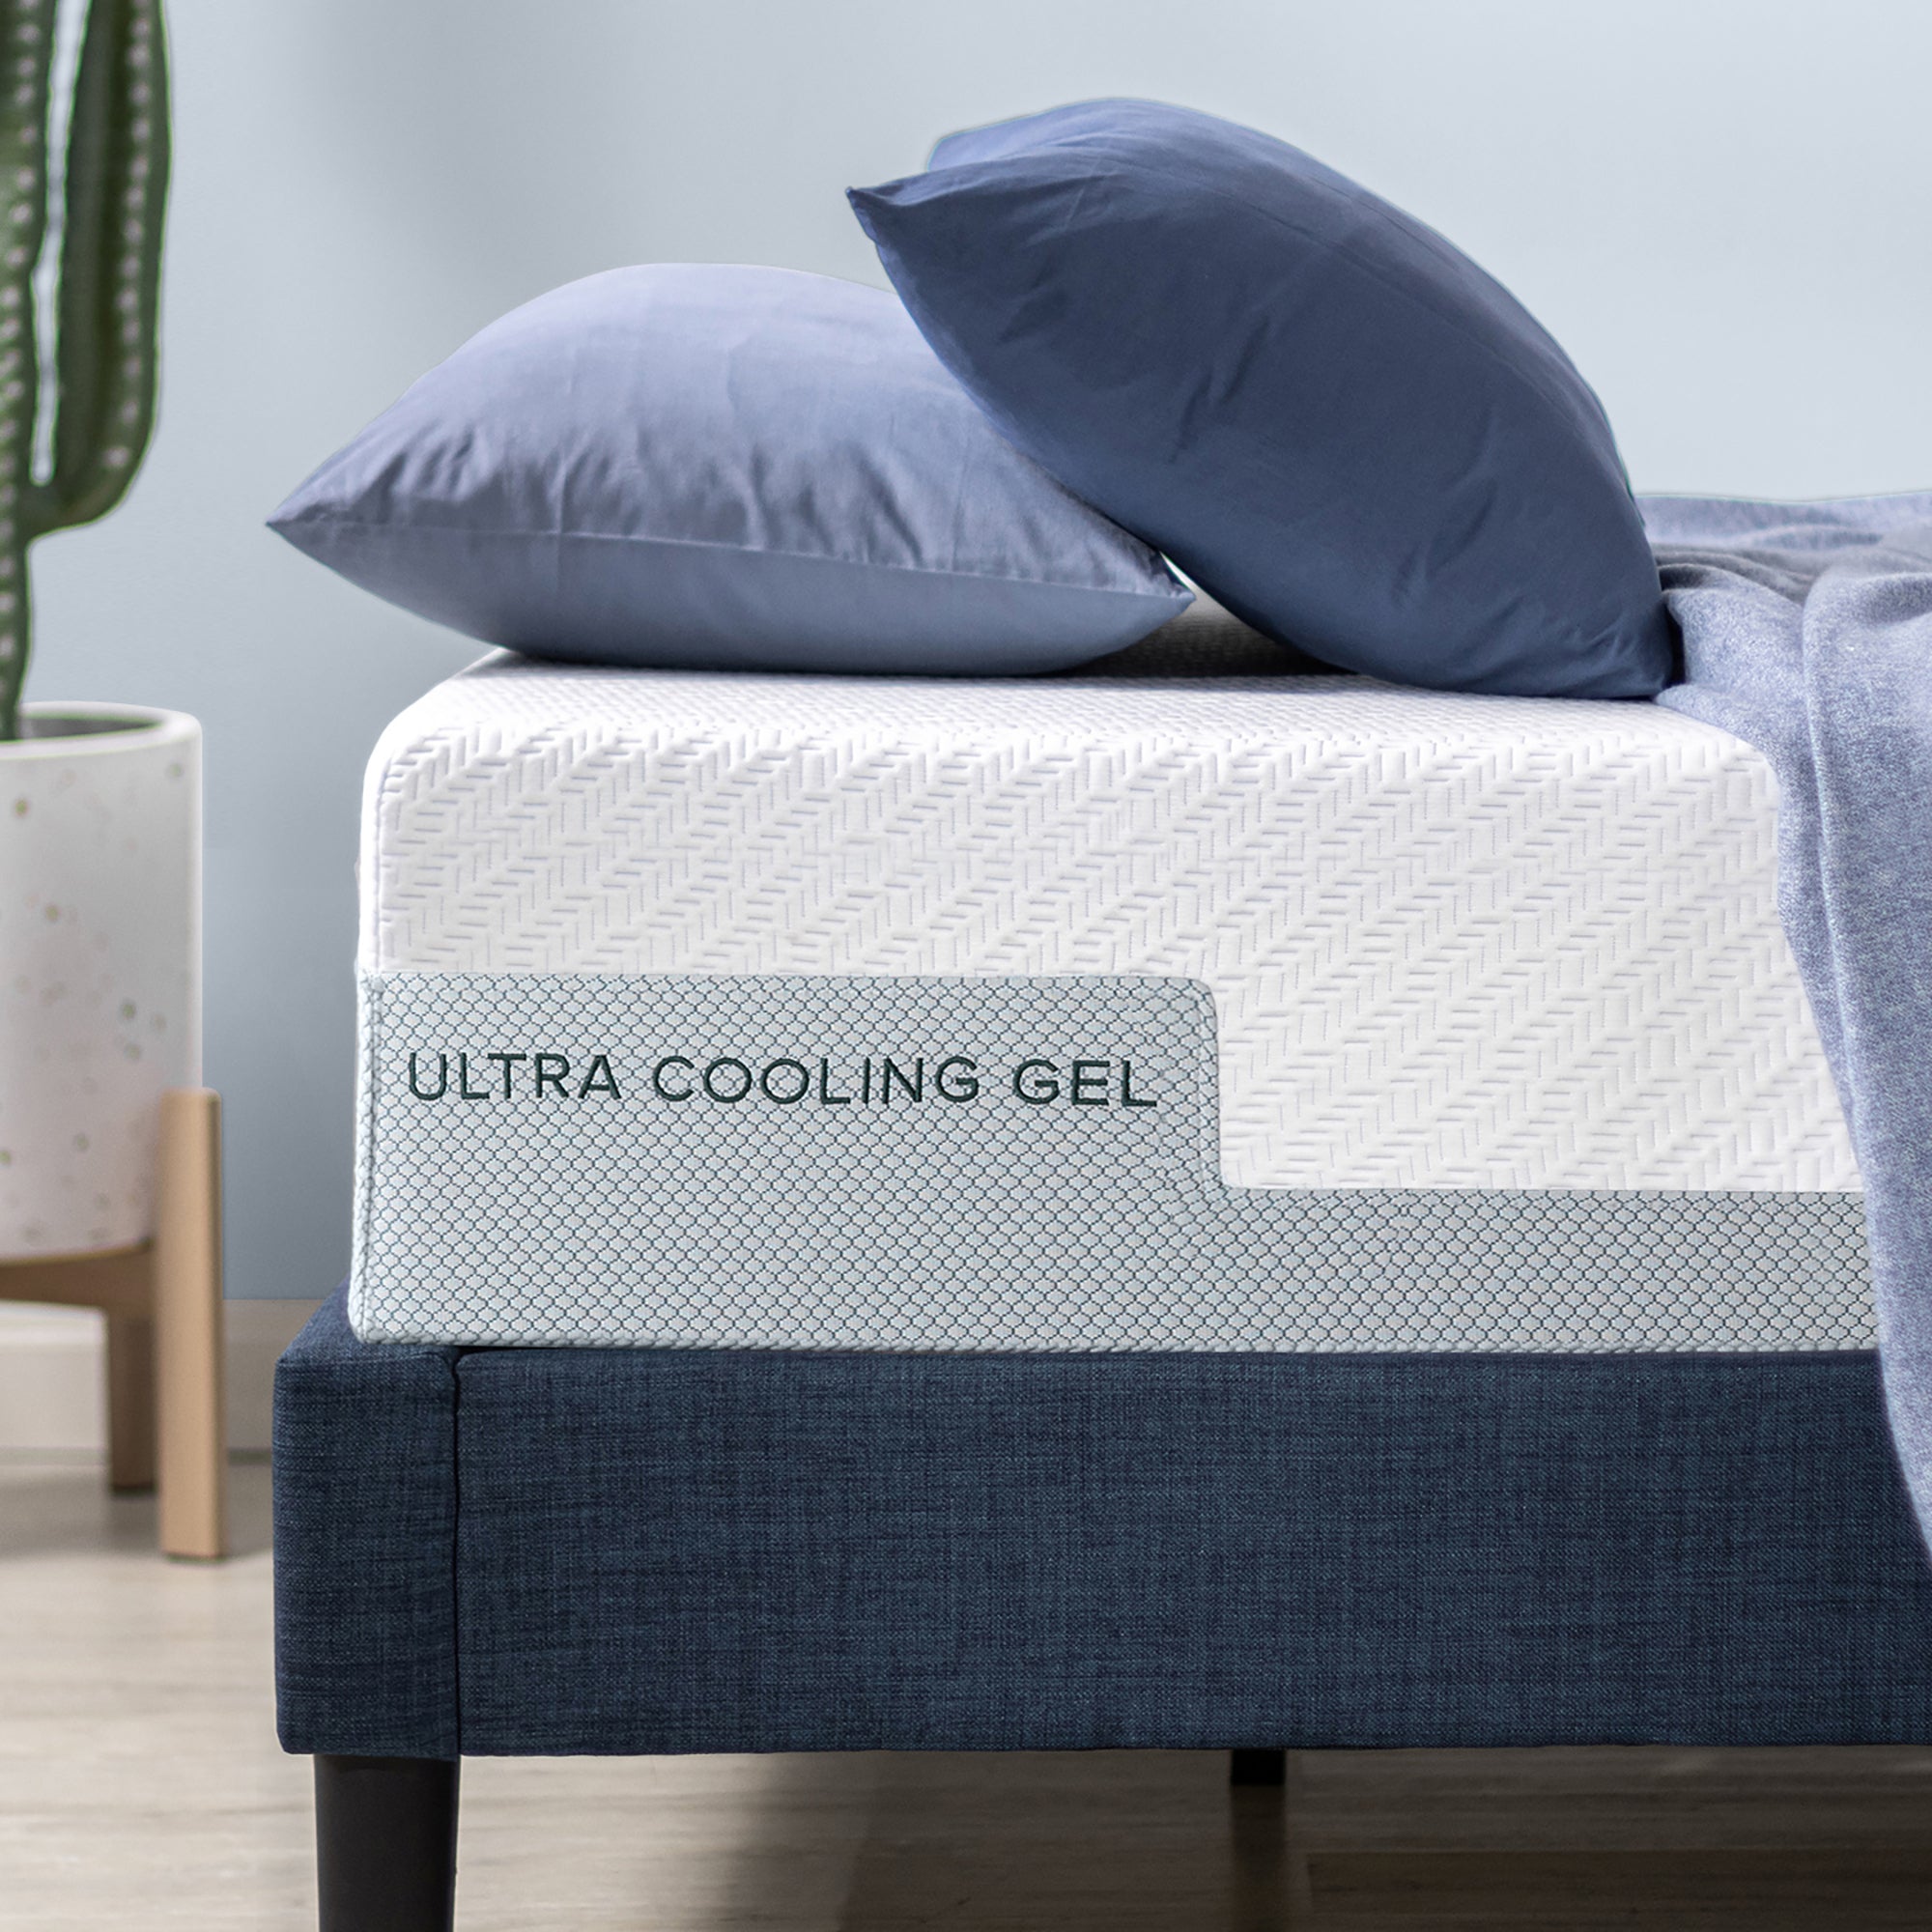 Bedroom setting showcasing the Ultra Cooling Gel Memory Foam Mattress